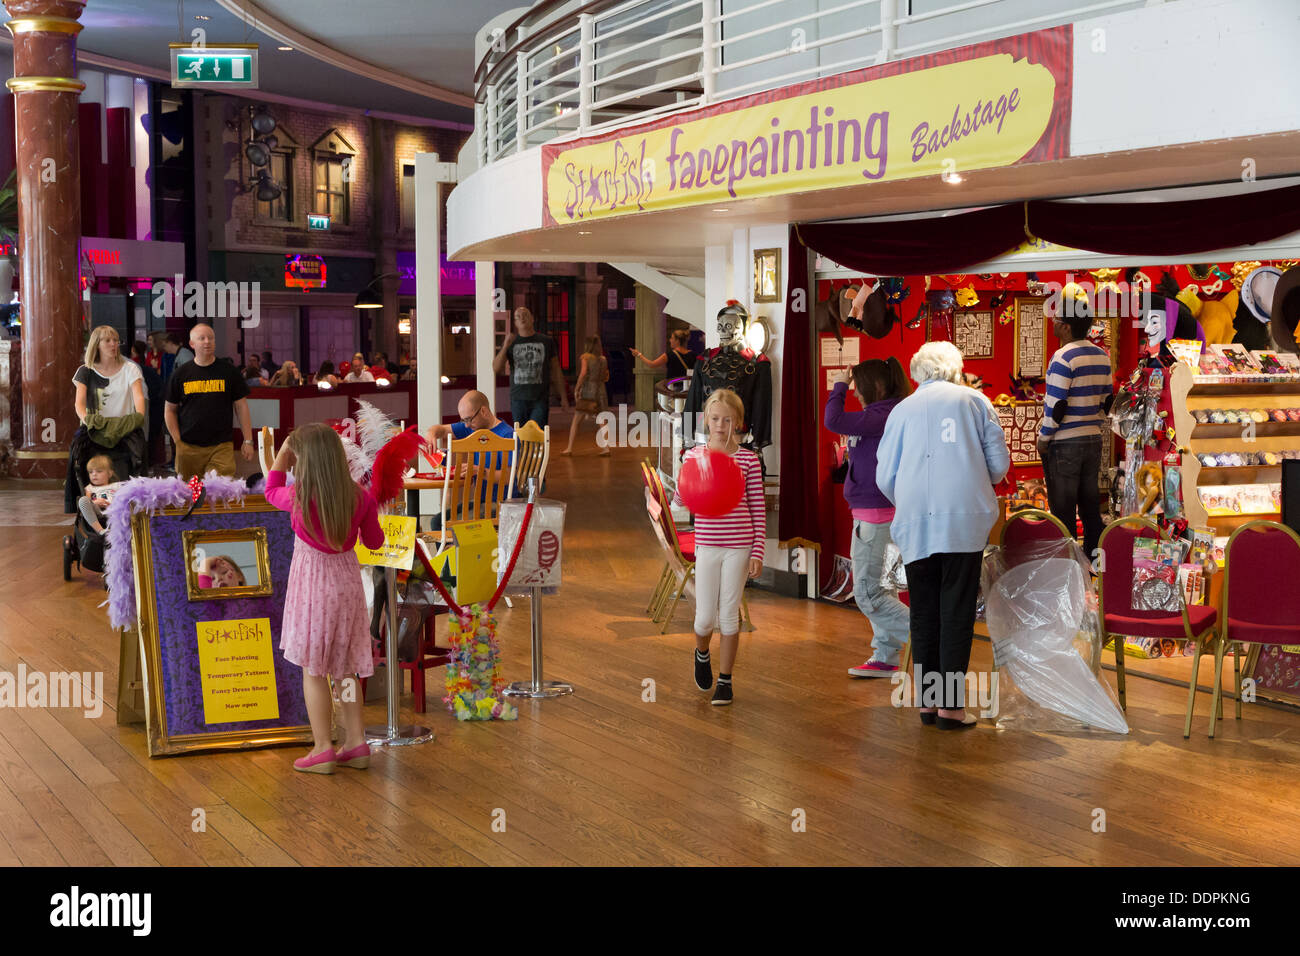 Bambini facepainting shop in Oriente all'Intu Trafford Centre, Manchester, Inghilterra. Foto Stock